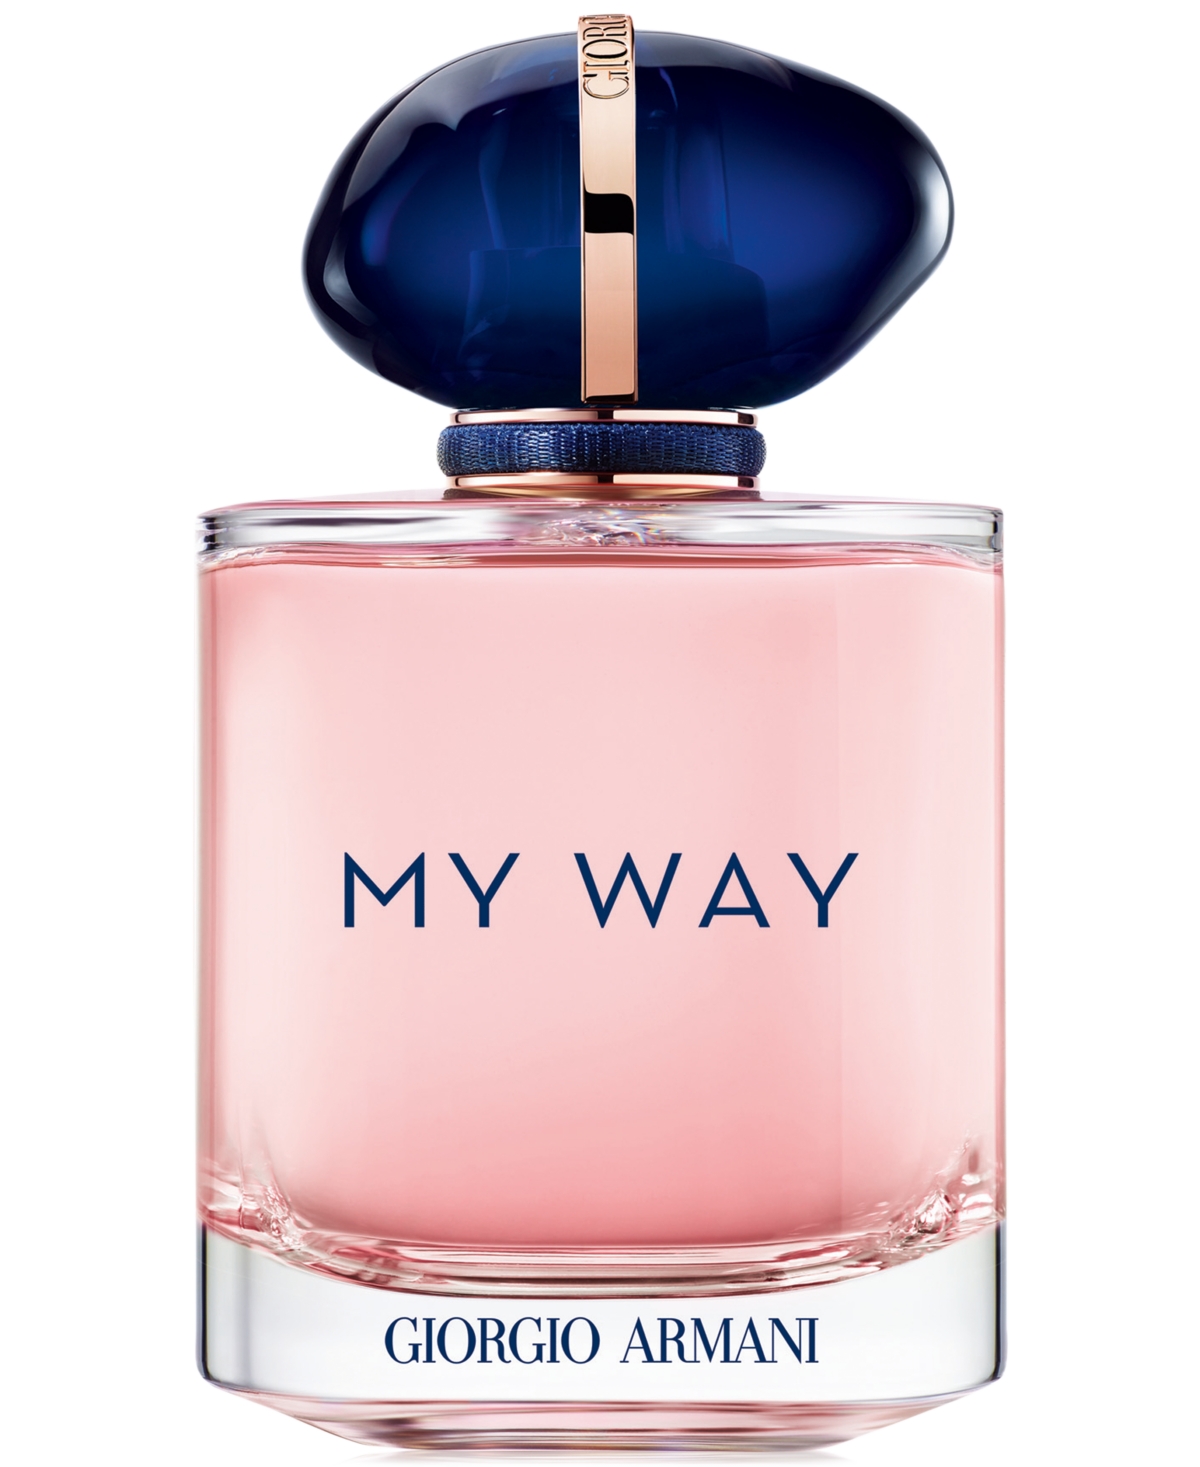 Introducir 83+ imagen macy’s armani perfume